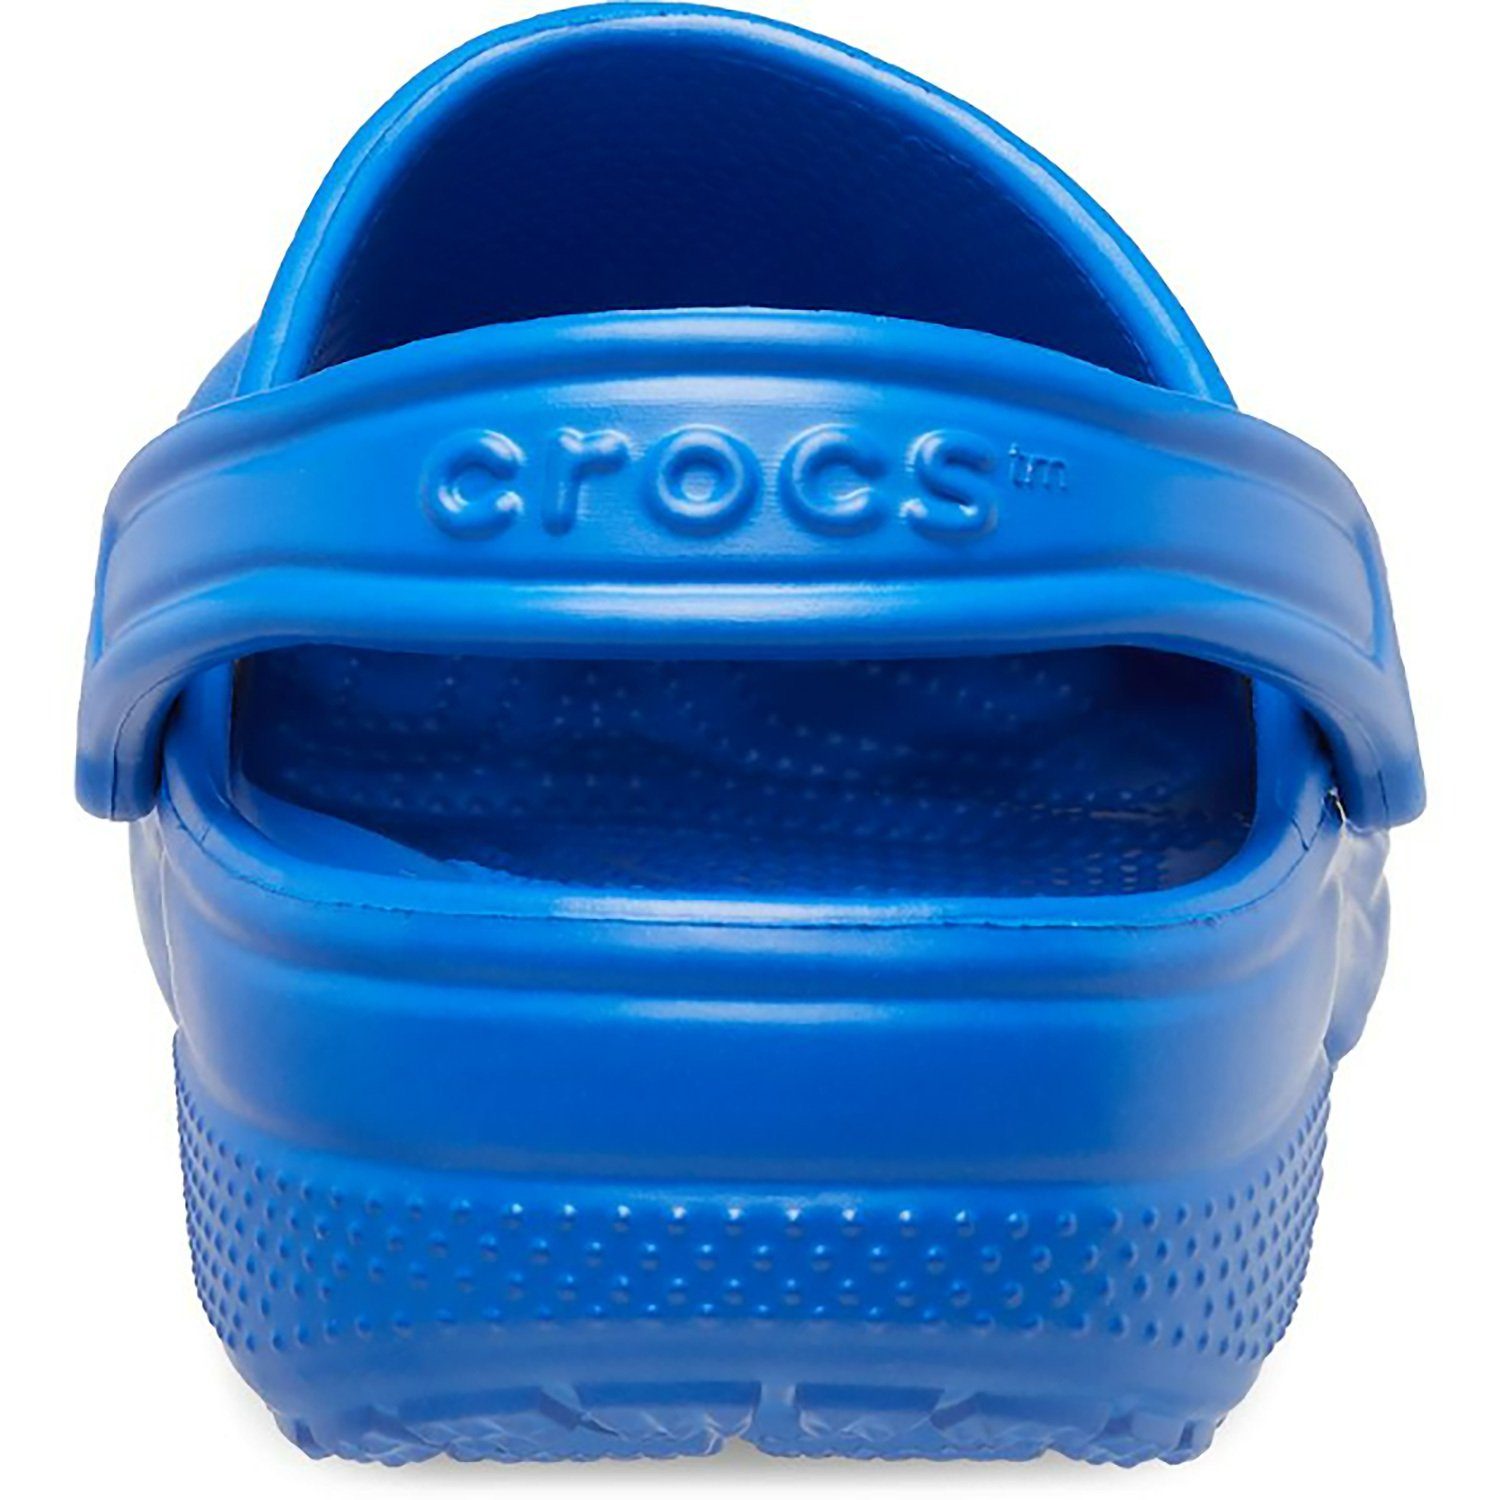 Clog Badeschuh Classic Azurblau Crocs